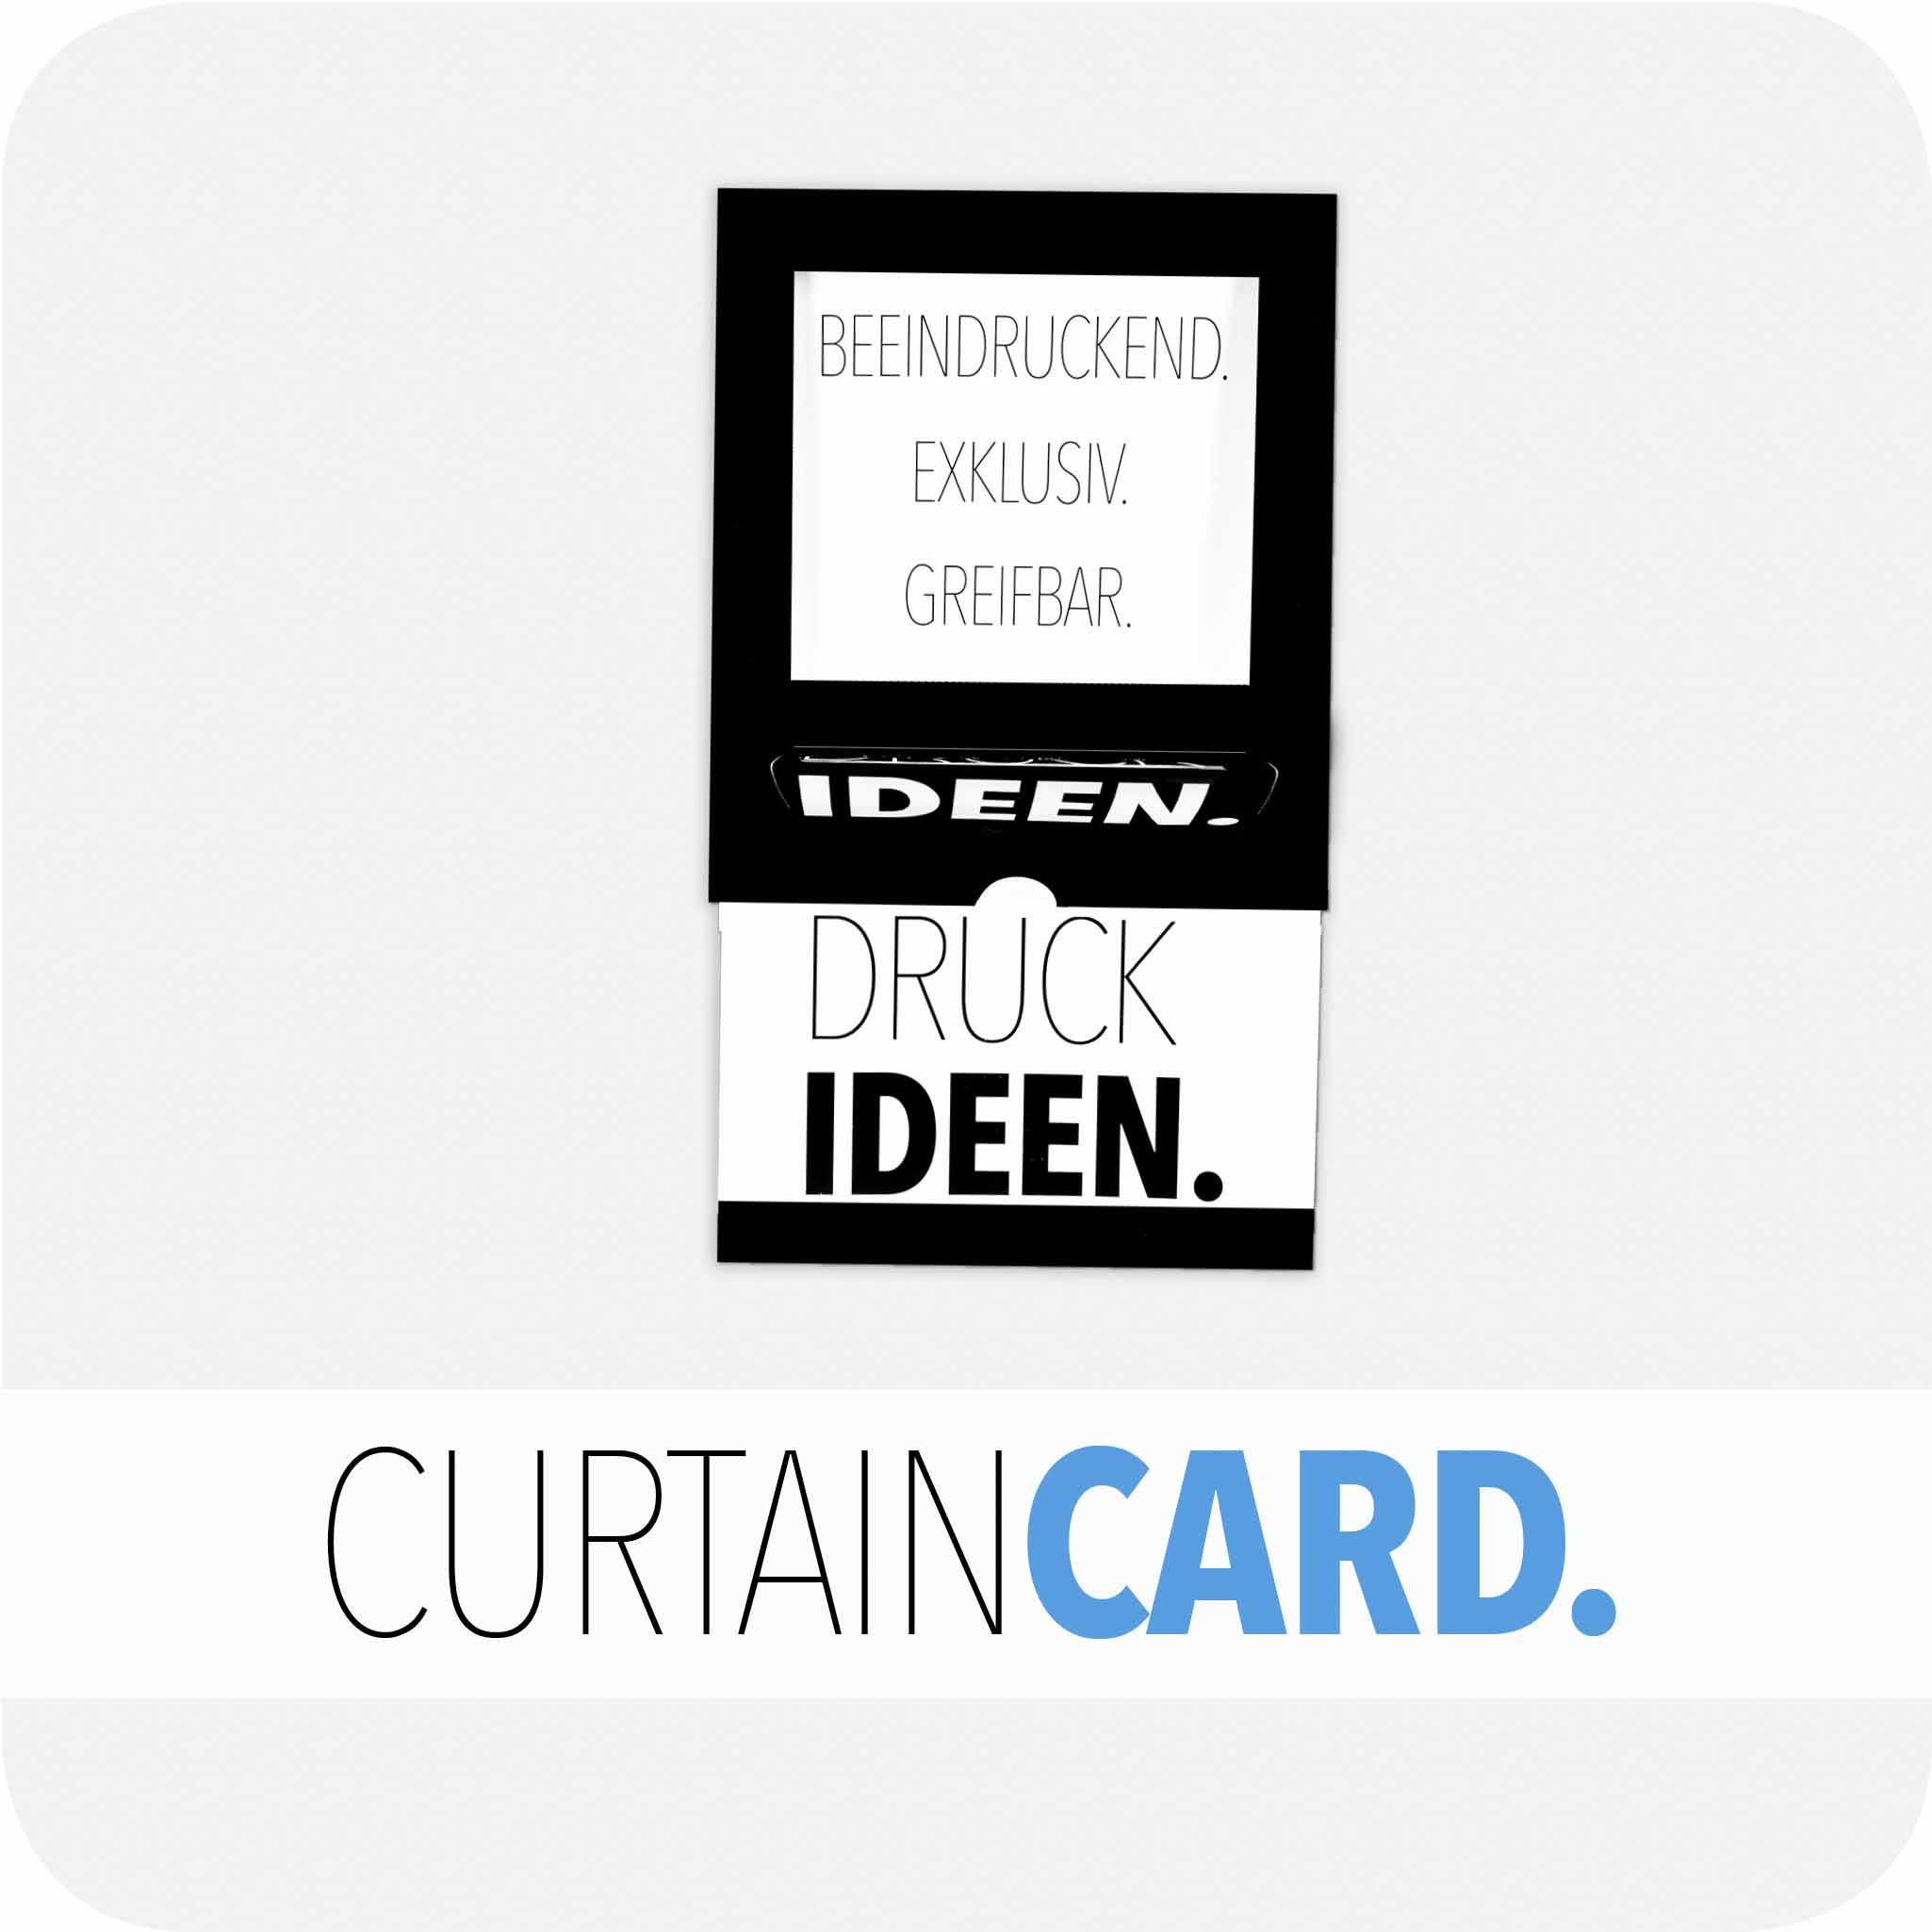 Curtain card